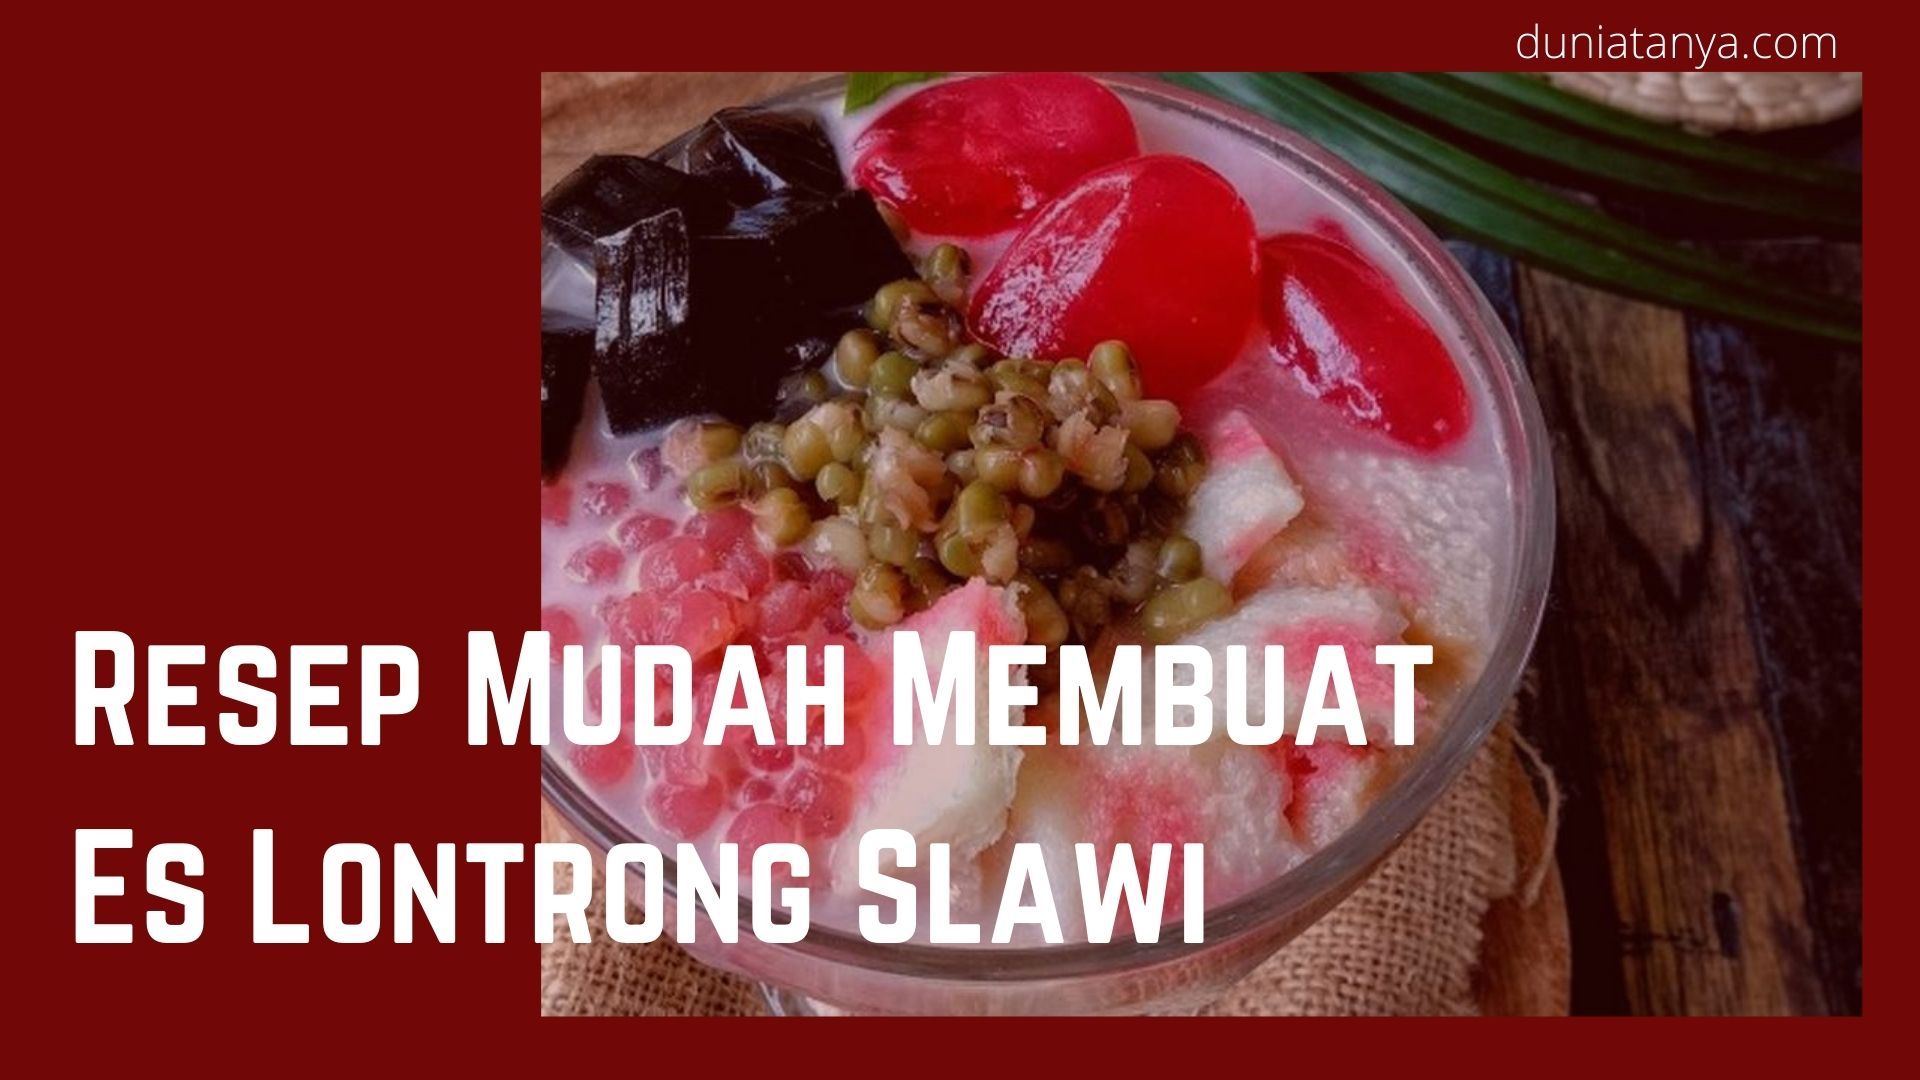 You are currently viewing Resep Mudah Membuat Es Lontrong Slawi